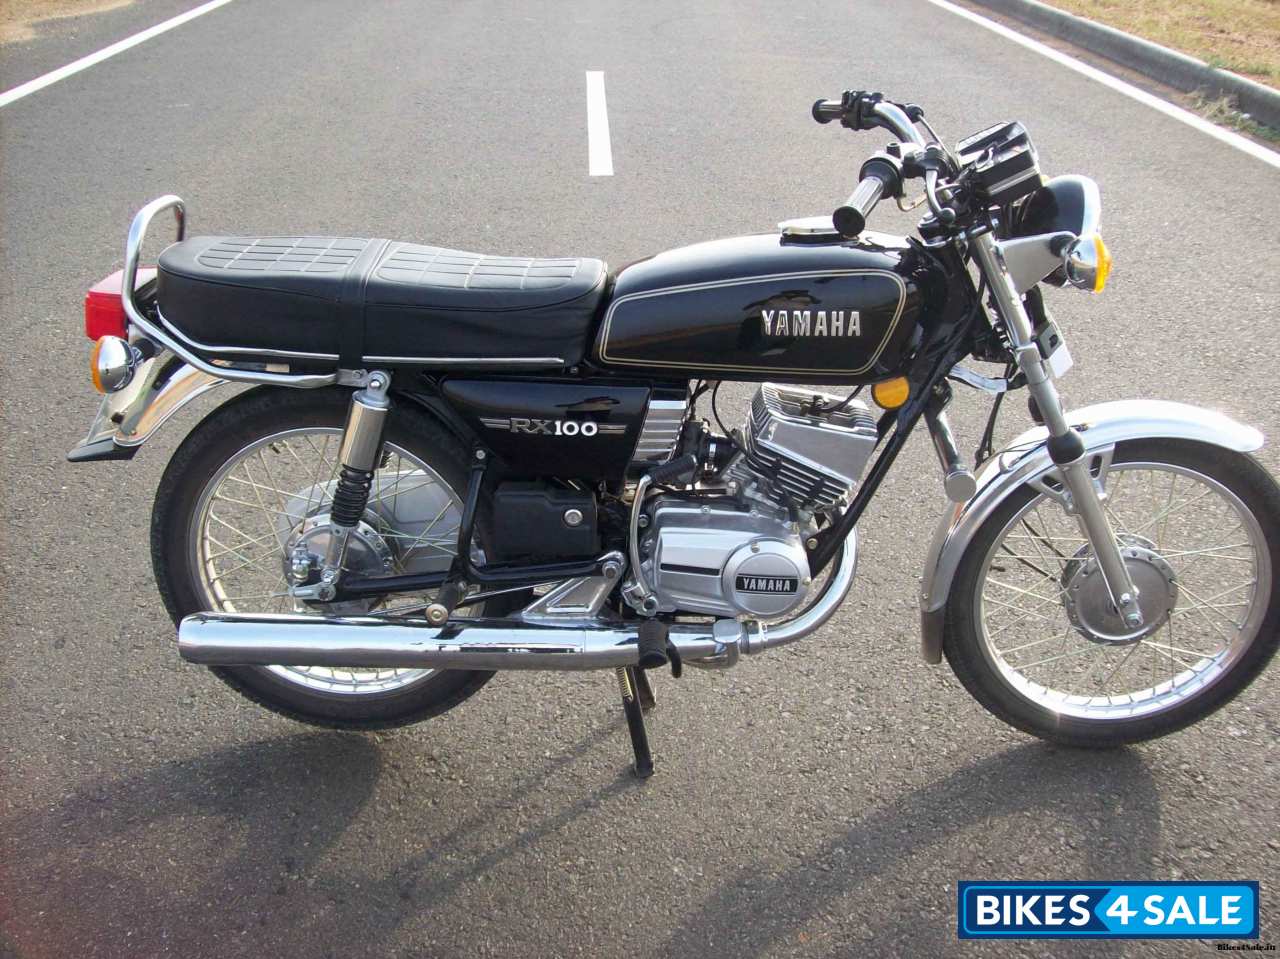 Yamaha Rx 100 New Bike Price In Andhra Pradesh